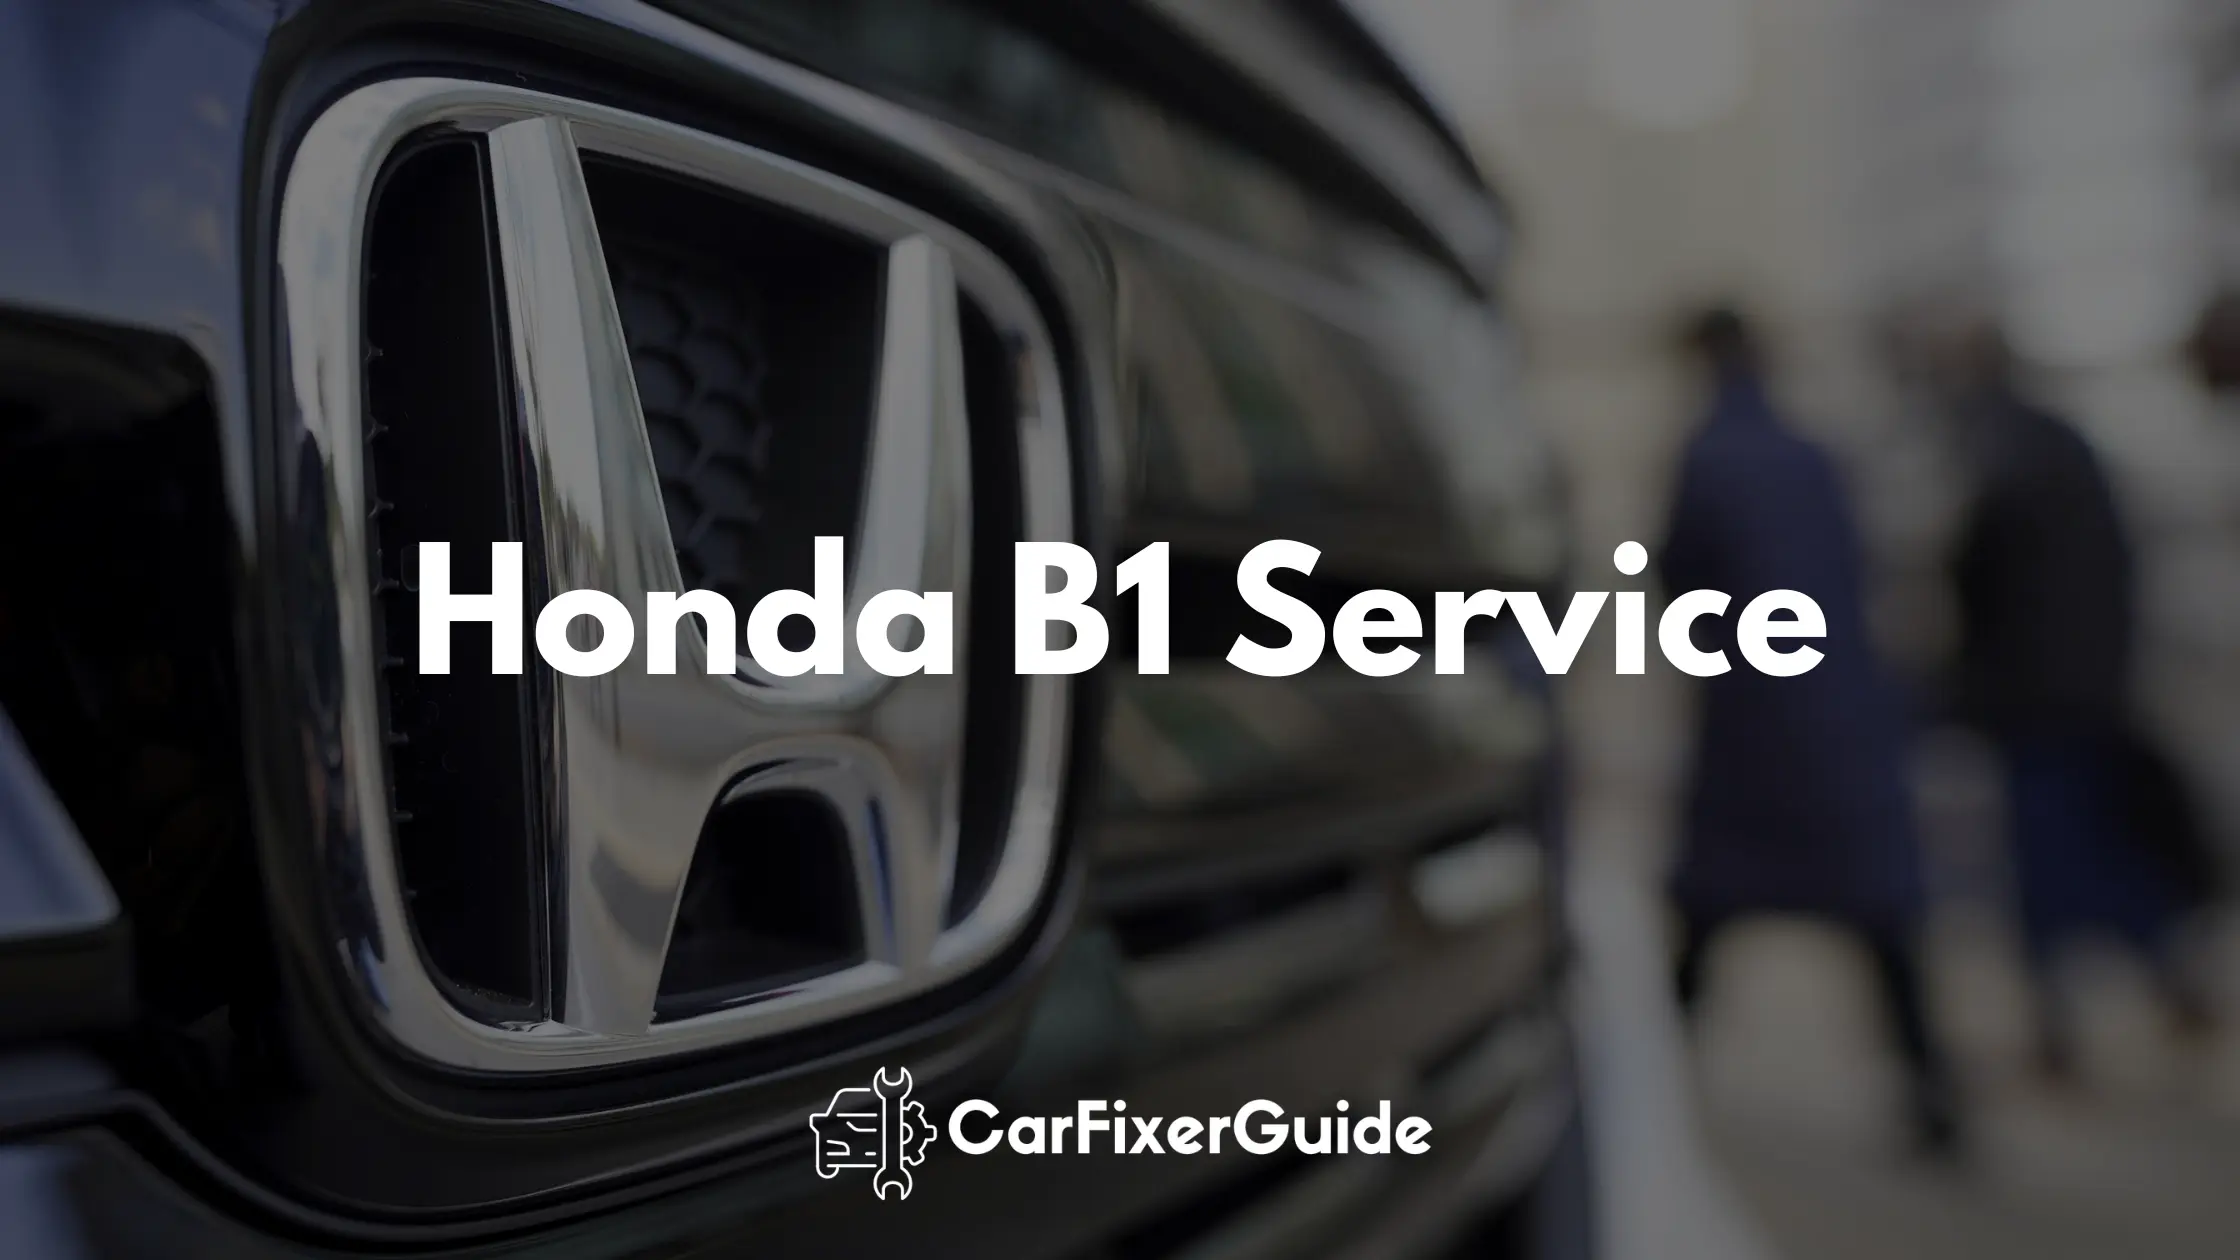 Honda B1 Service